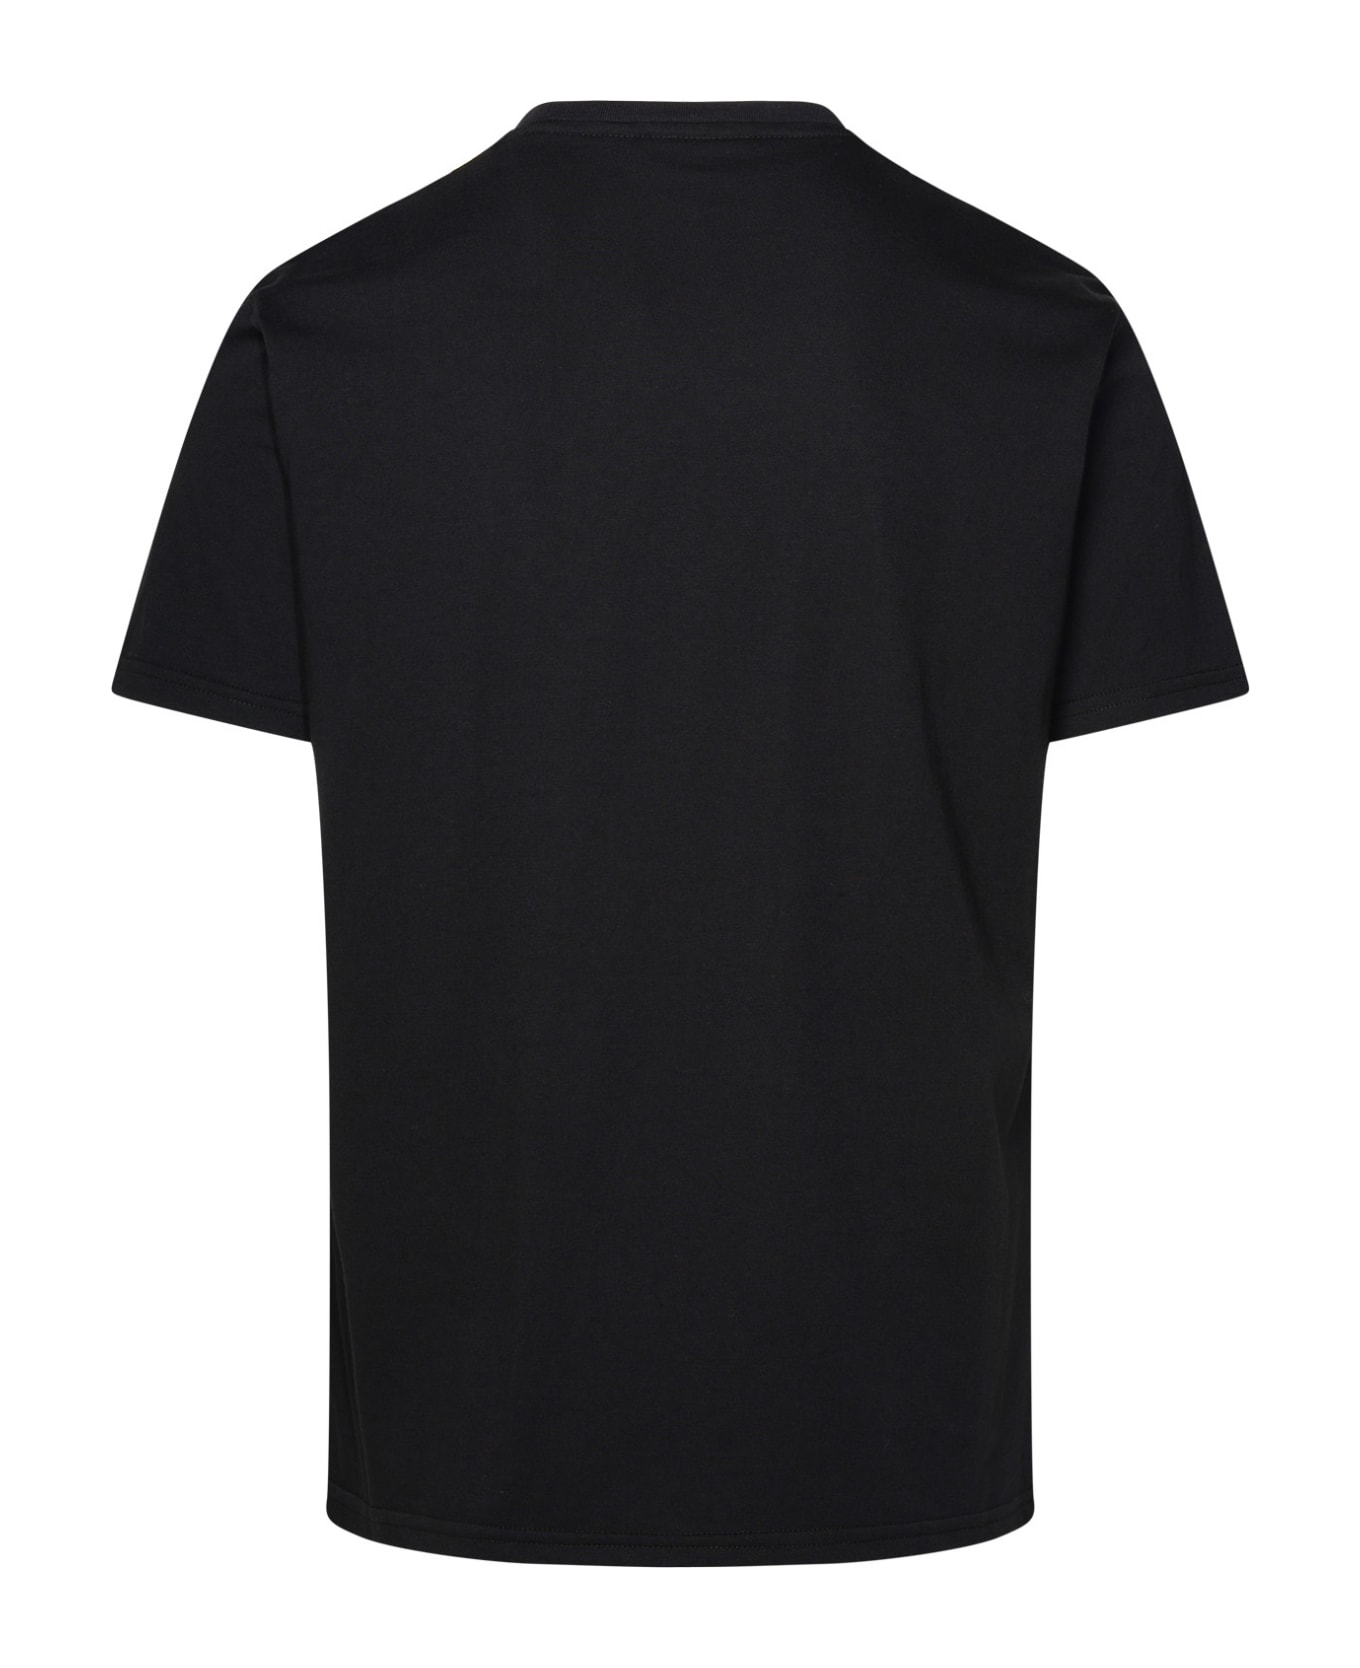 GCDS Black Cotton T-shirt - Nero シャツ